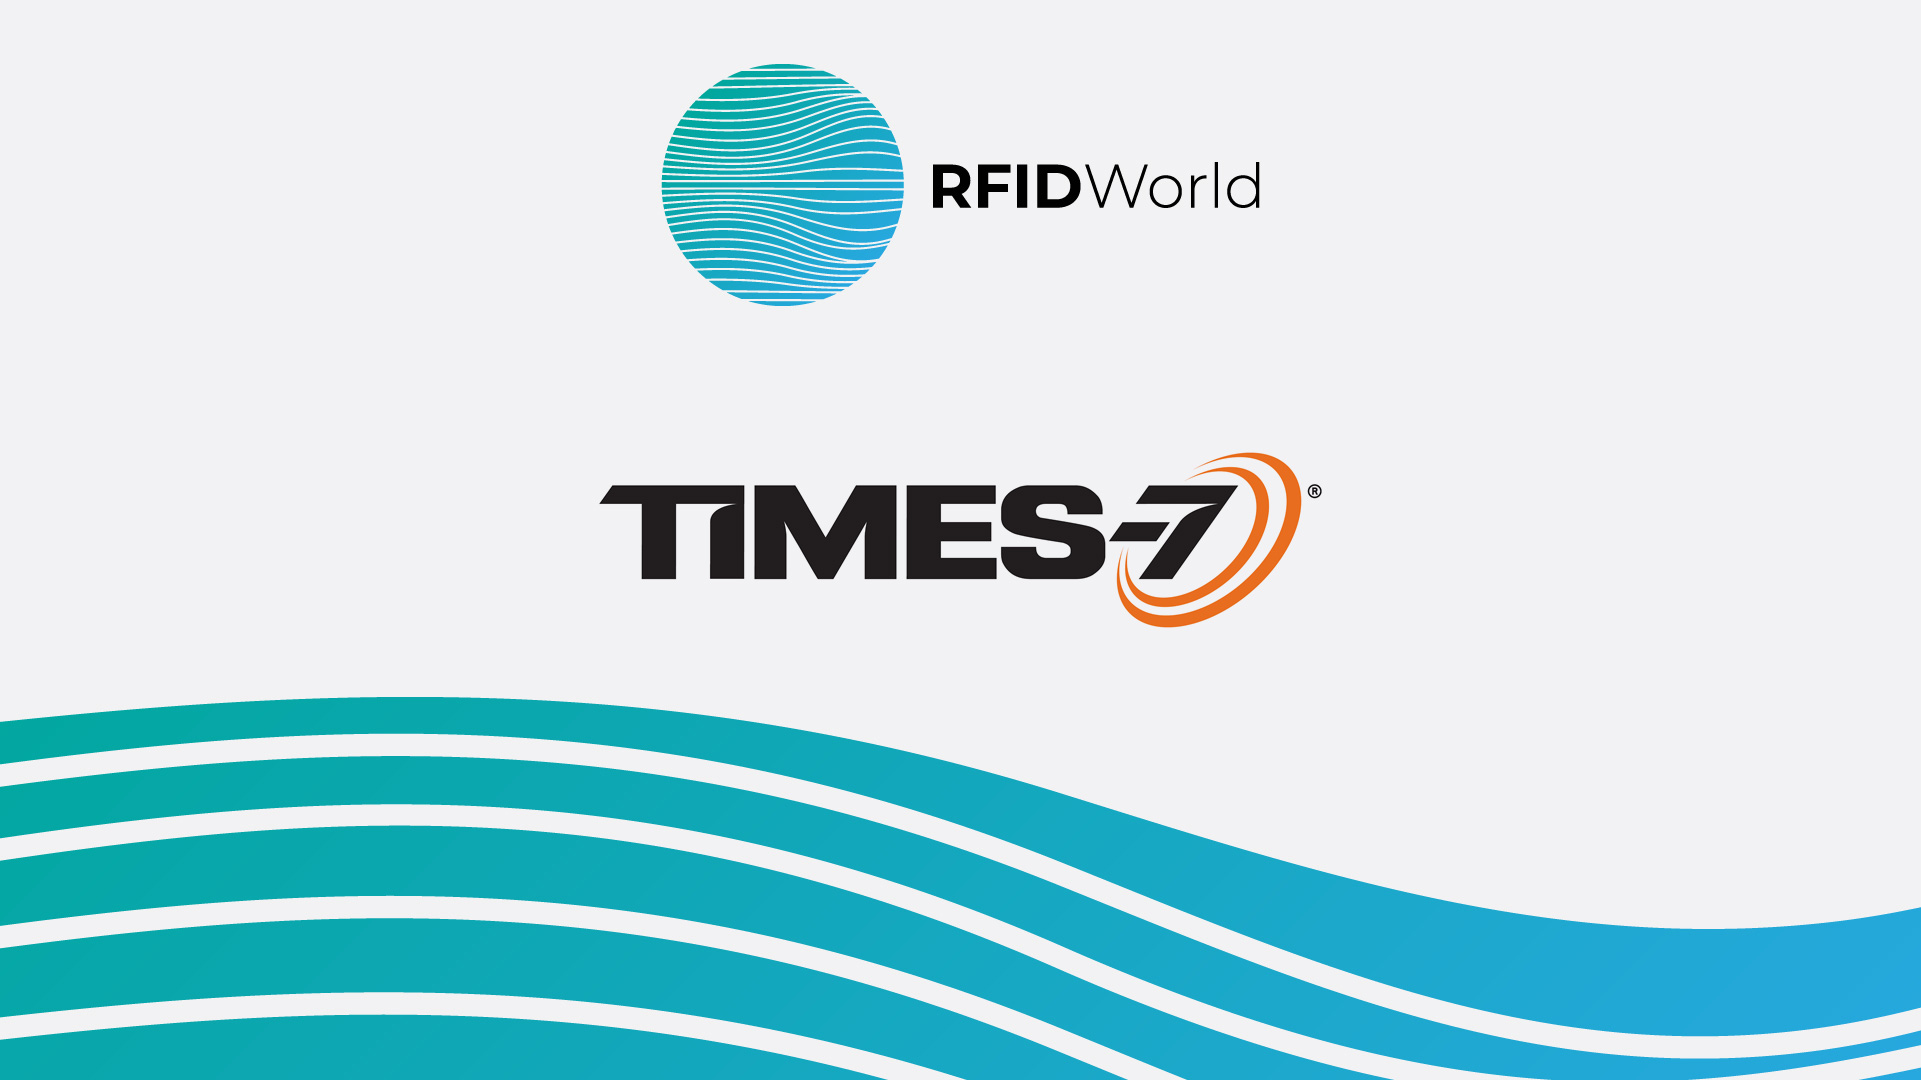 Times 7 News | RFID World